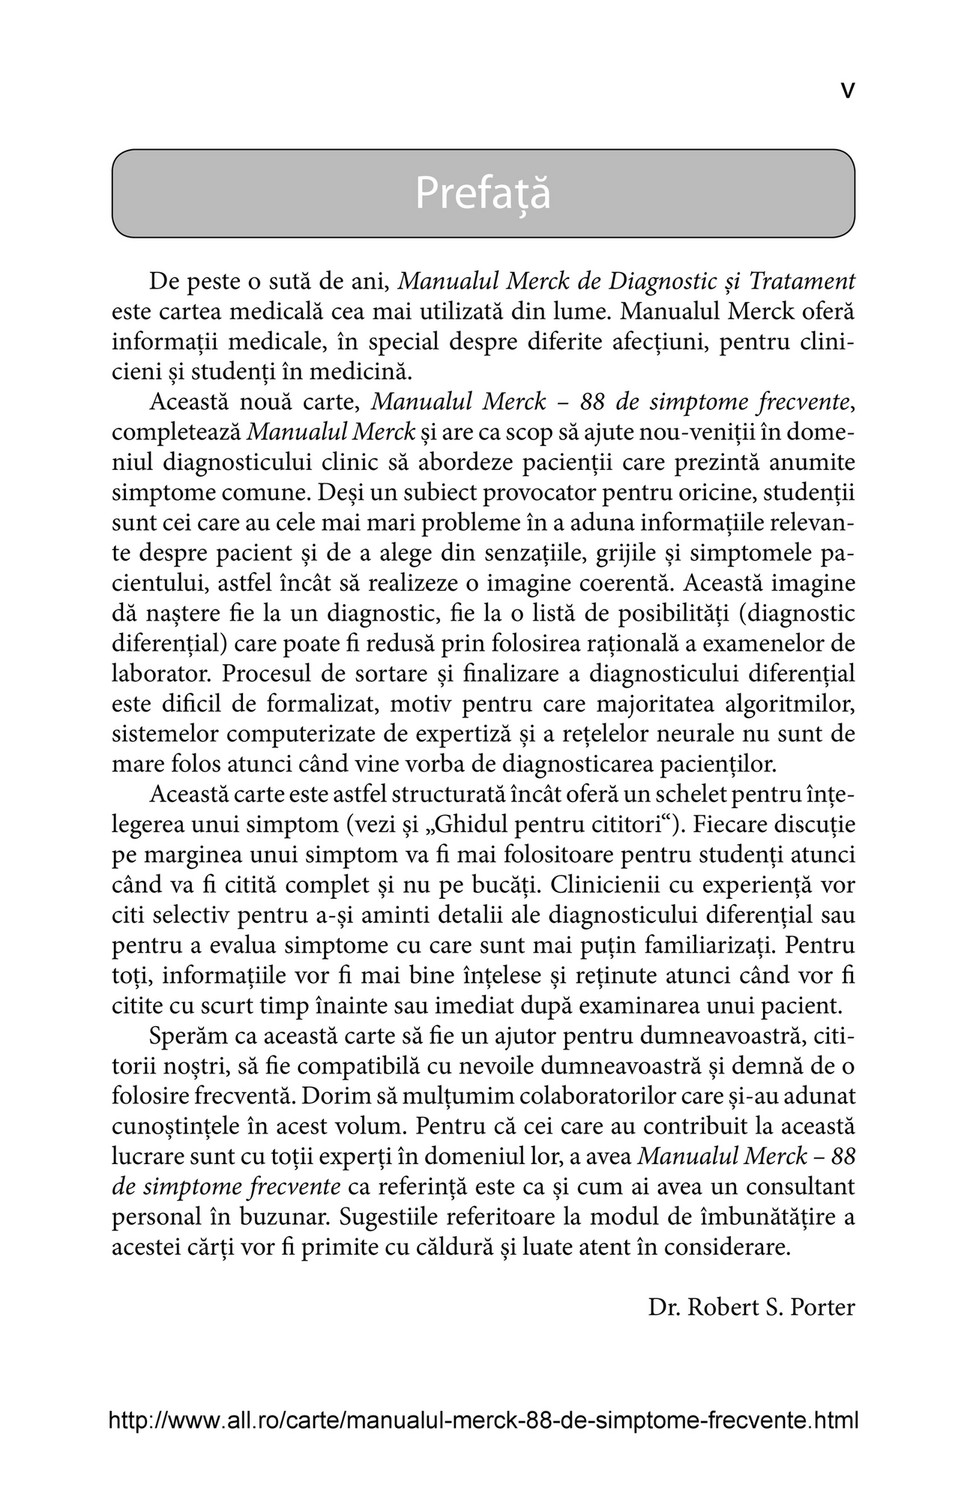 Dangle Fruity problem Carti - Manualul Merck - diagnostic si tratament pdf - Page 4-5 - Created  with Publitas.com